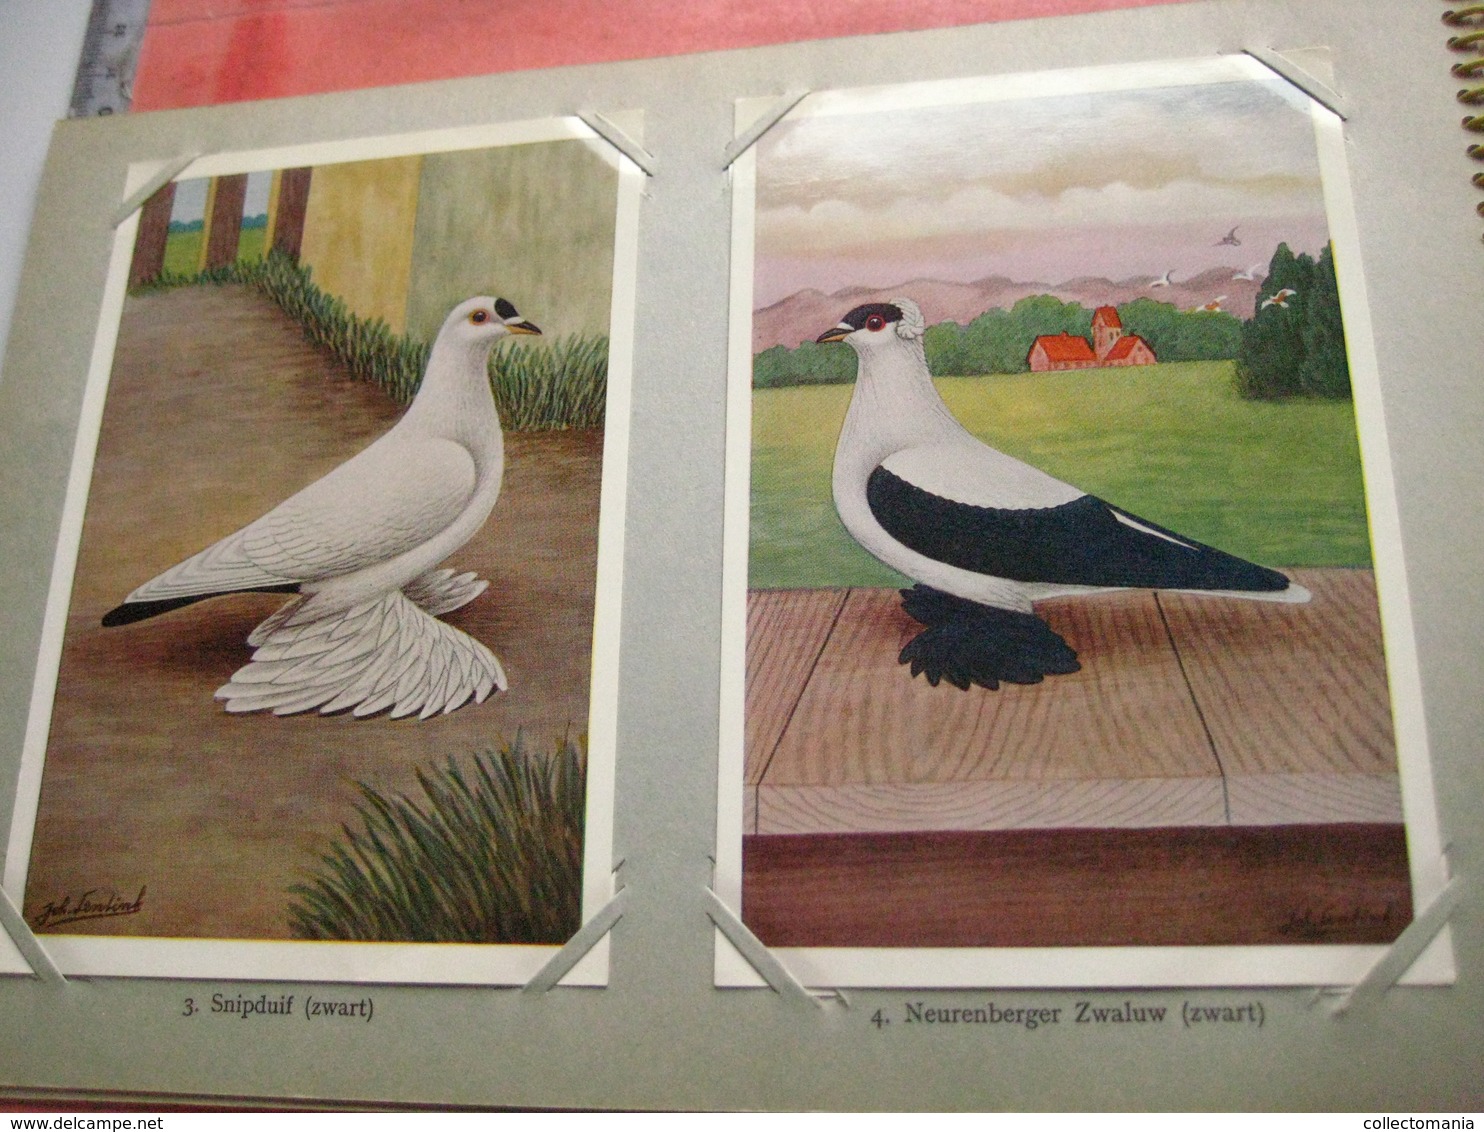 full set complete 24 cards TAUBEN duiven pigeons - 2 ALBUMS Conserven fabriek TAMINIAUX - ELST Hollandse Tuimelaar e.a.